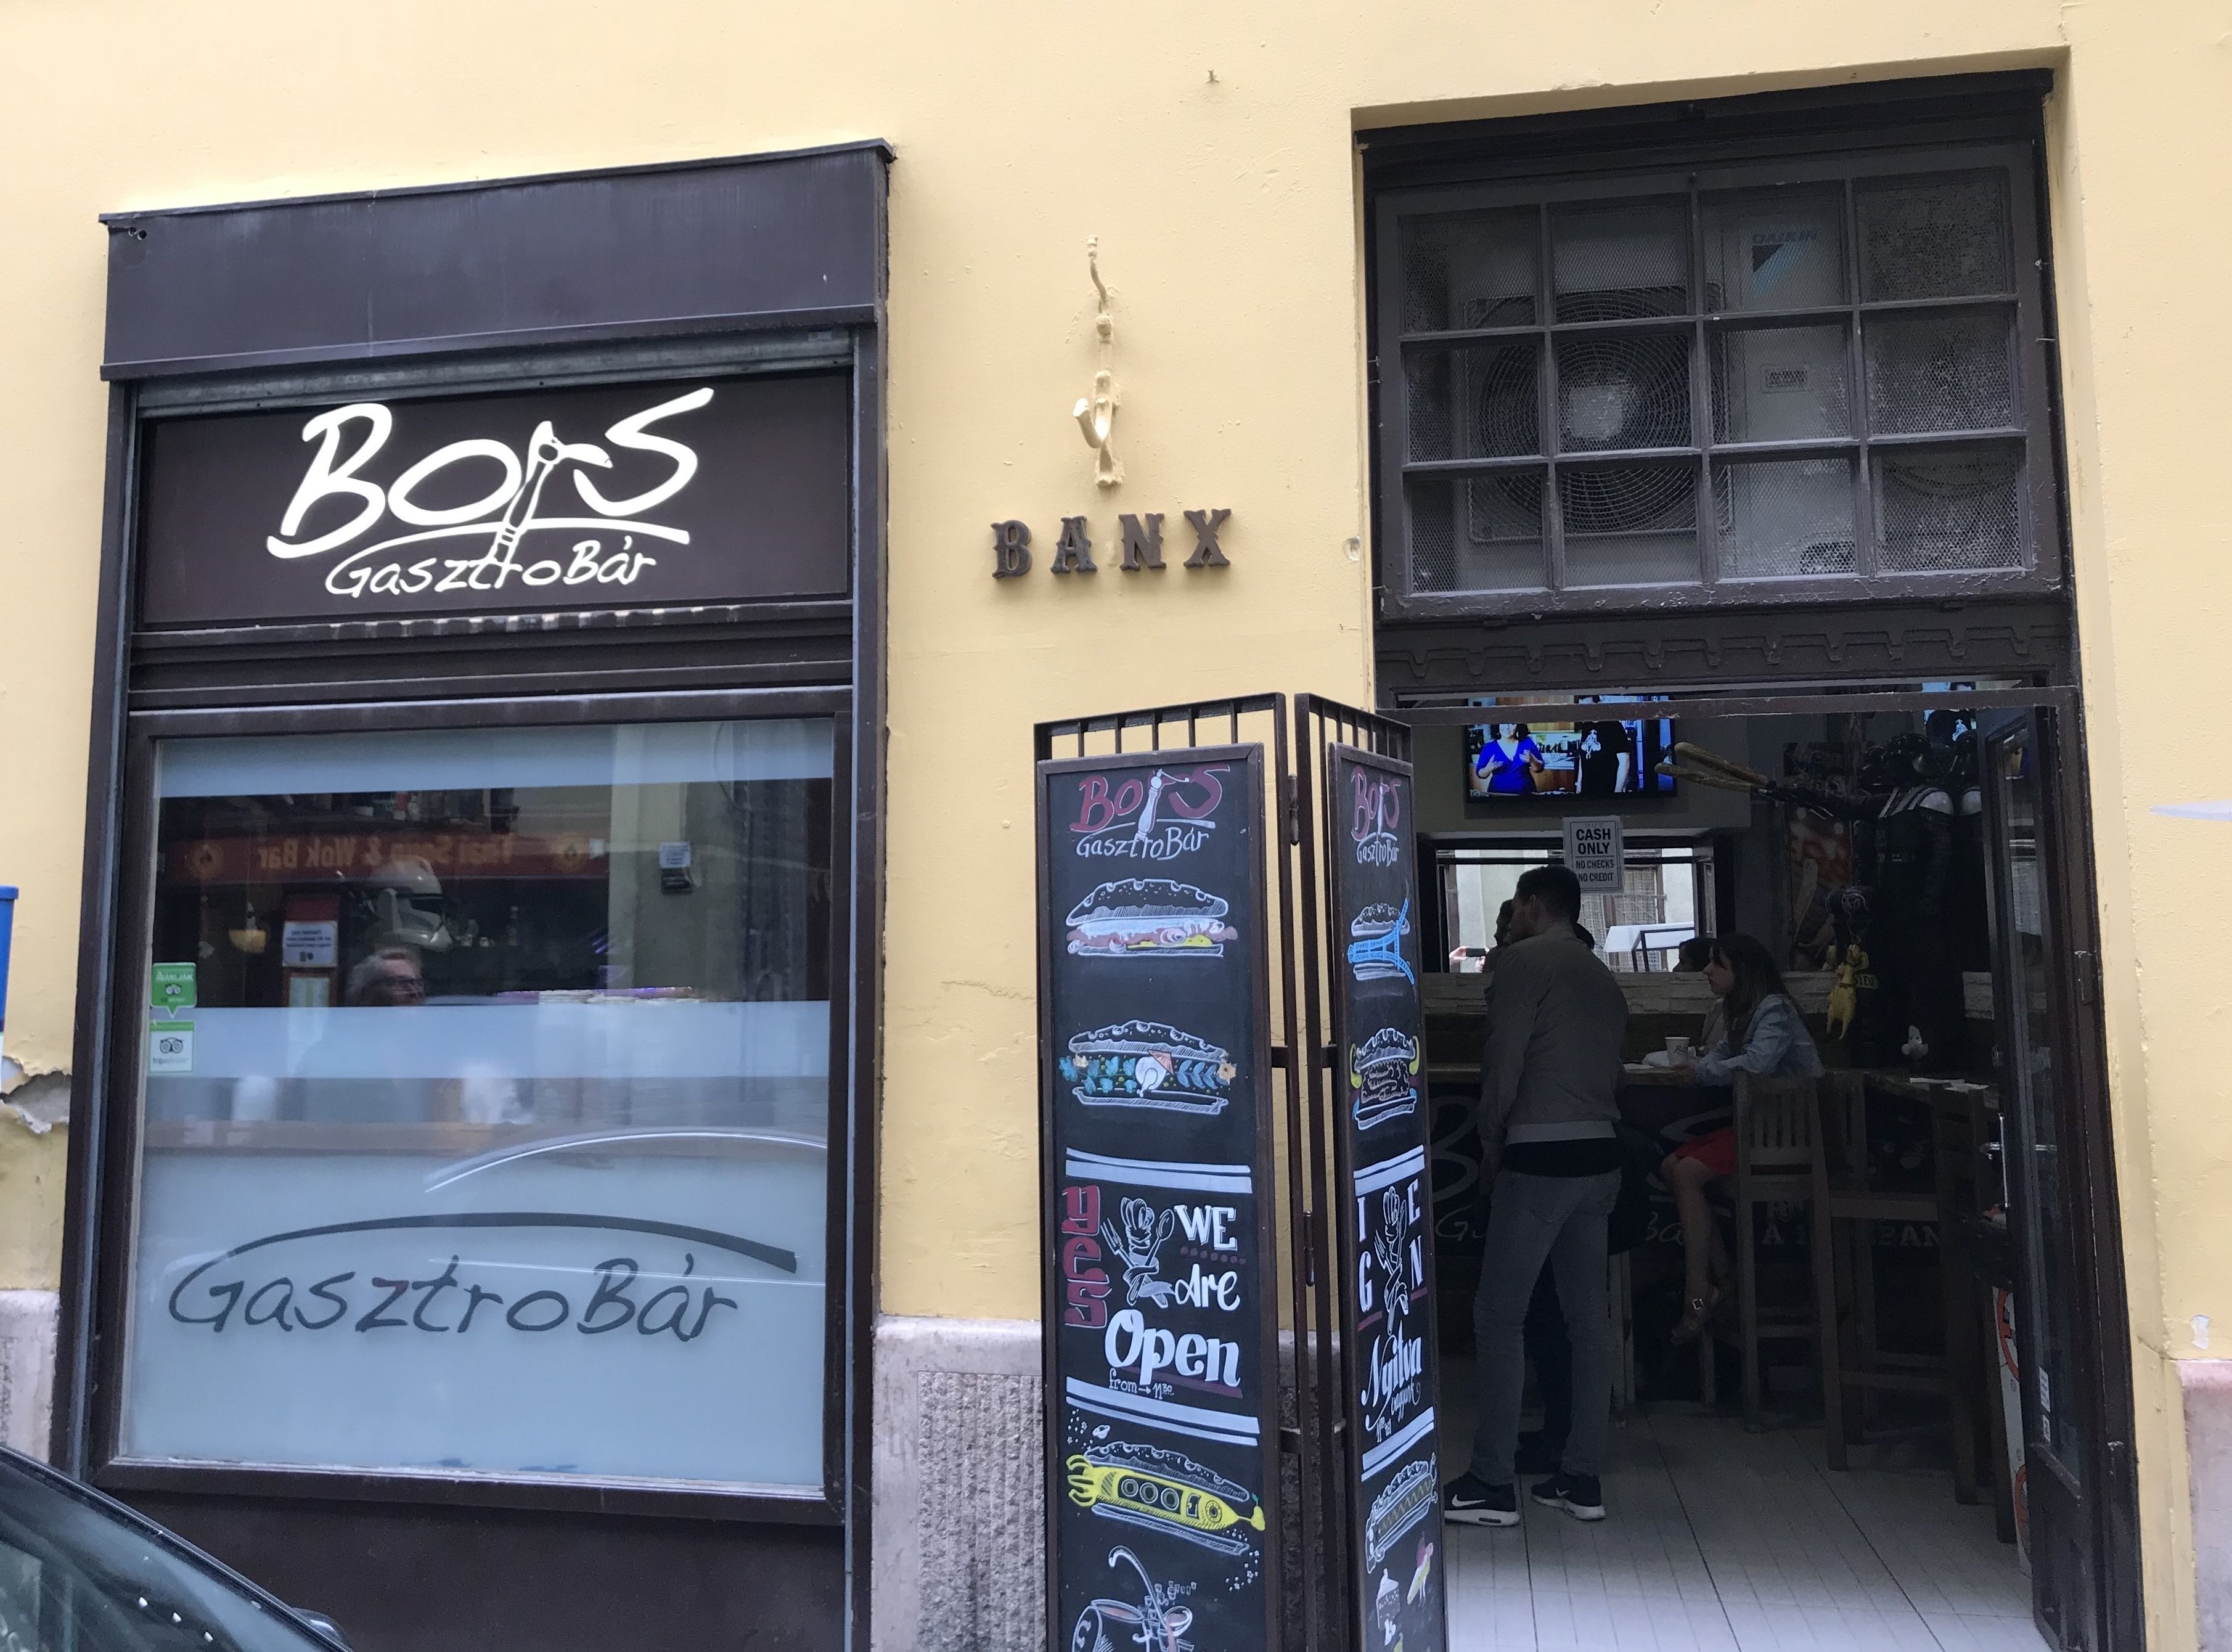 Bors Gastro Bar, Budapest